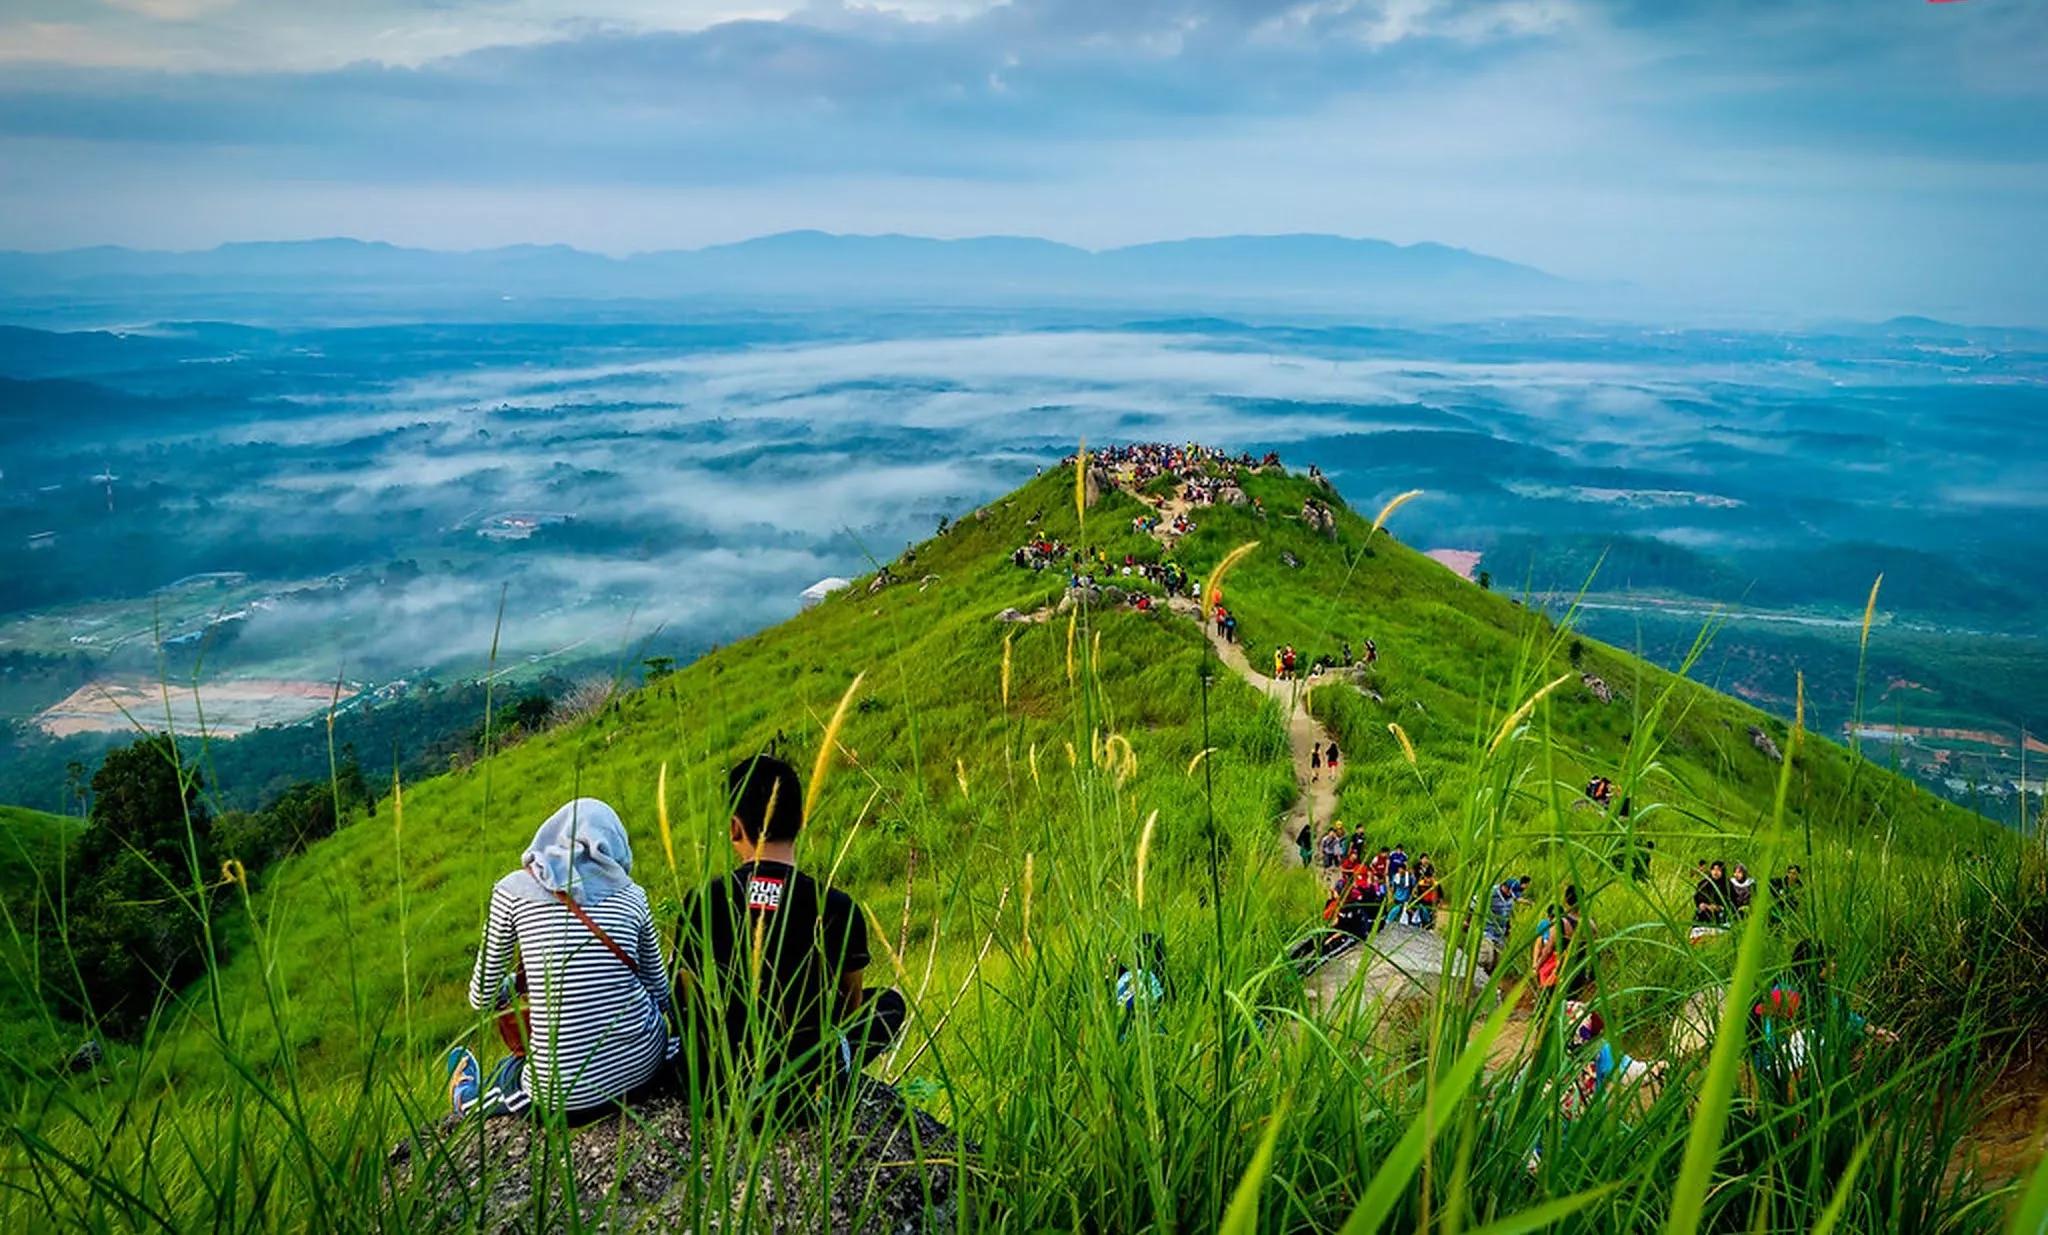 Broga Hill in Malaysia, East Asia | Trekking & Hiking - Rated 3.6